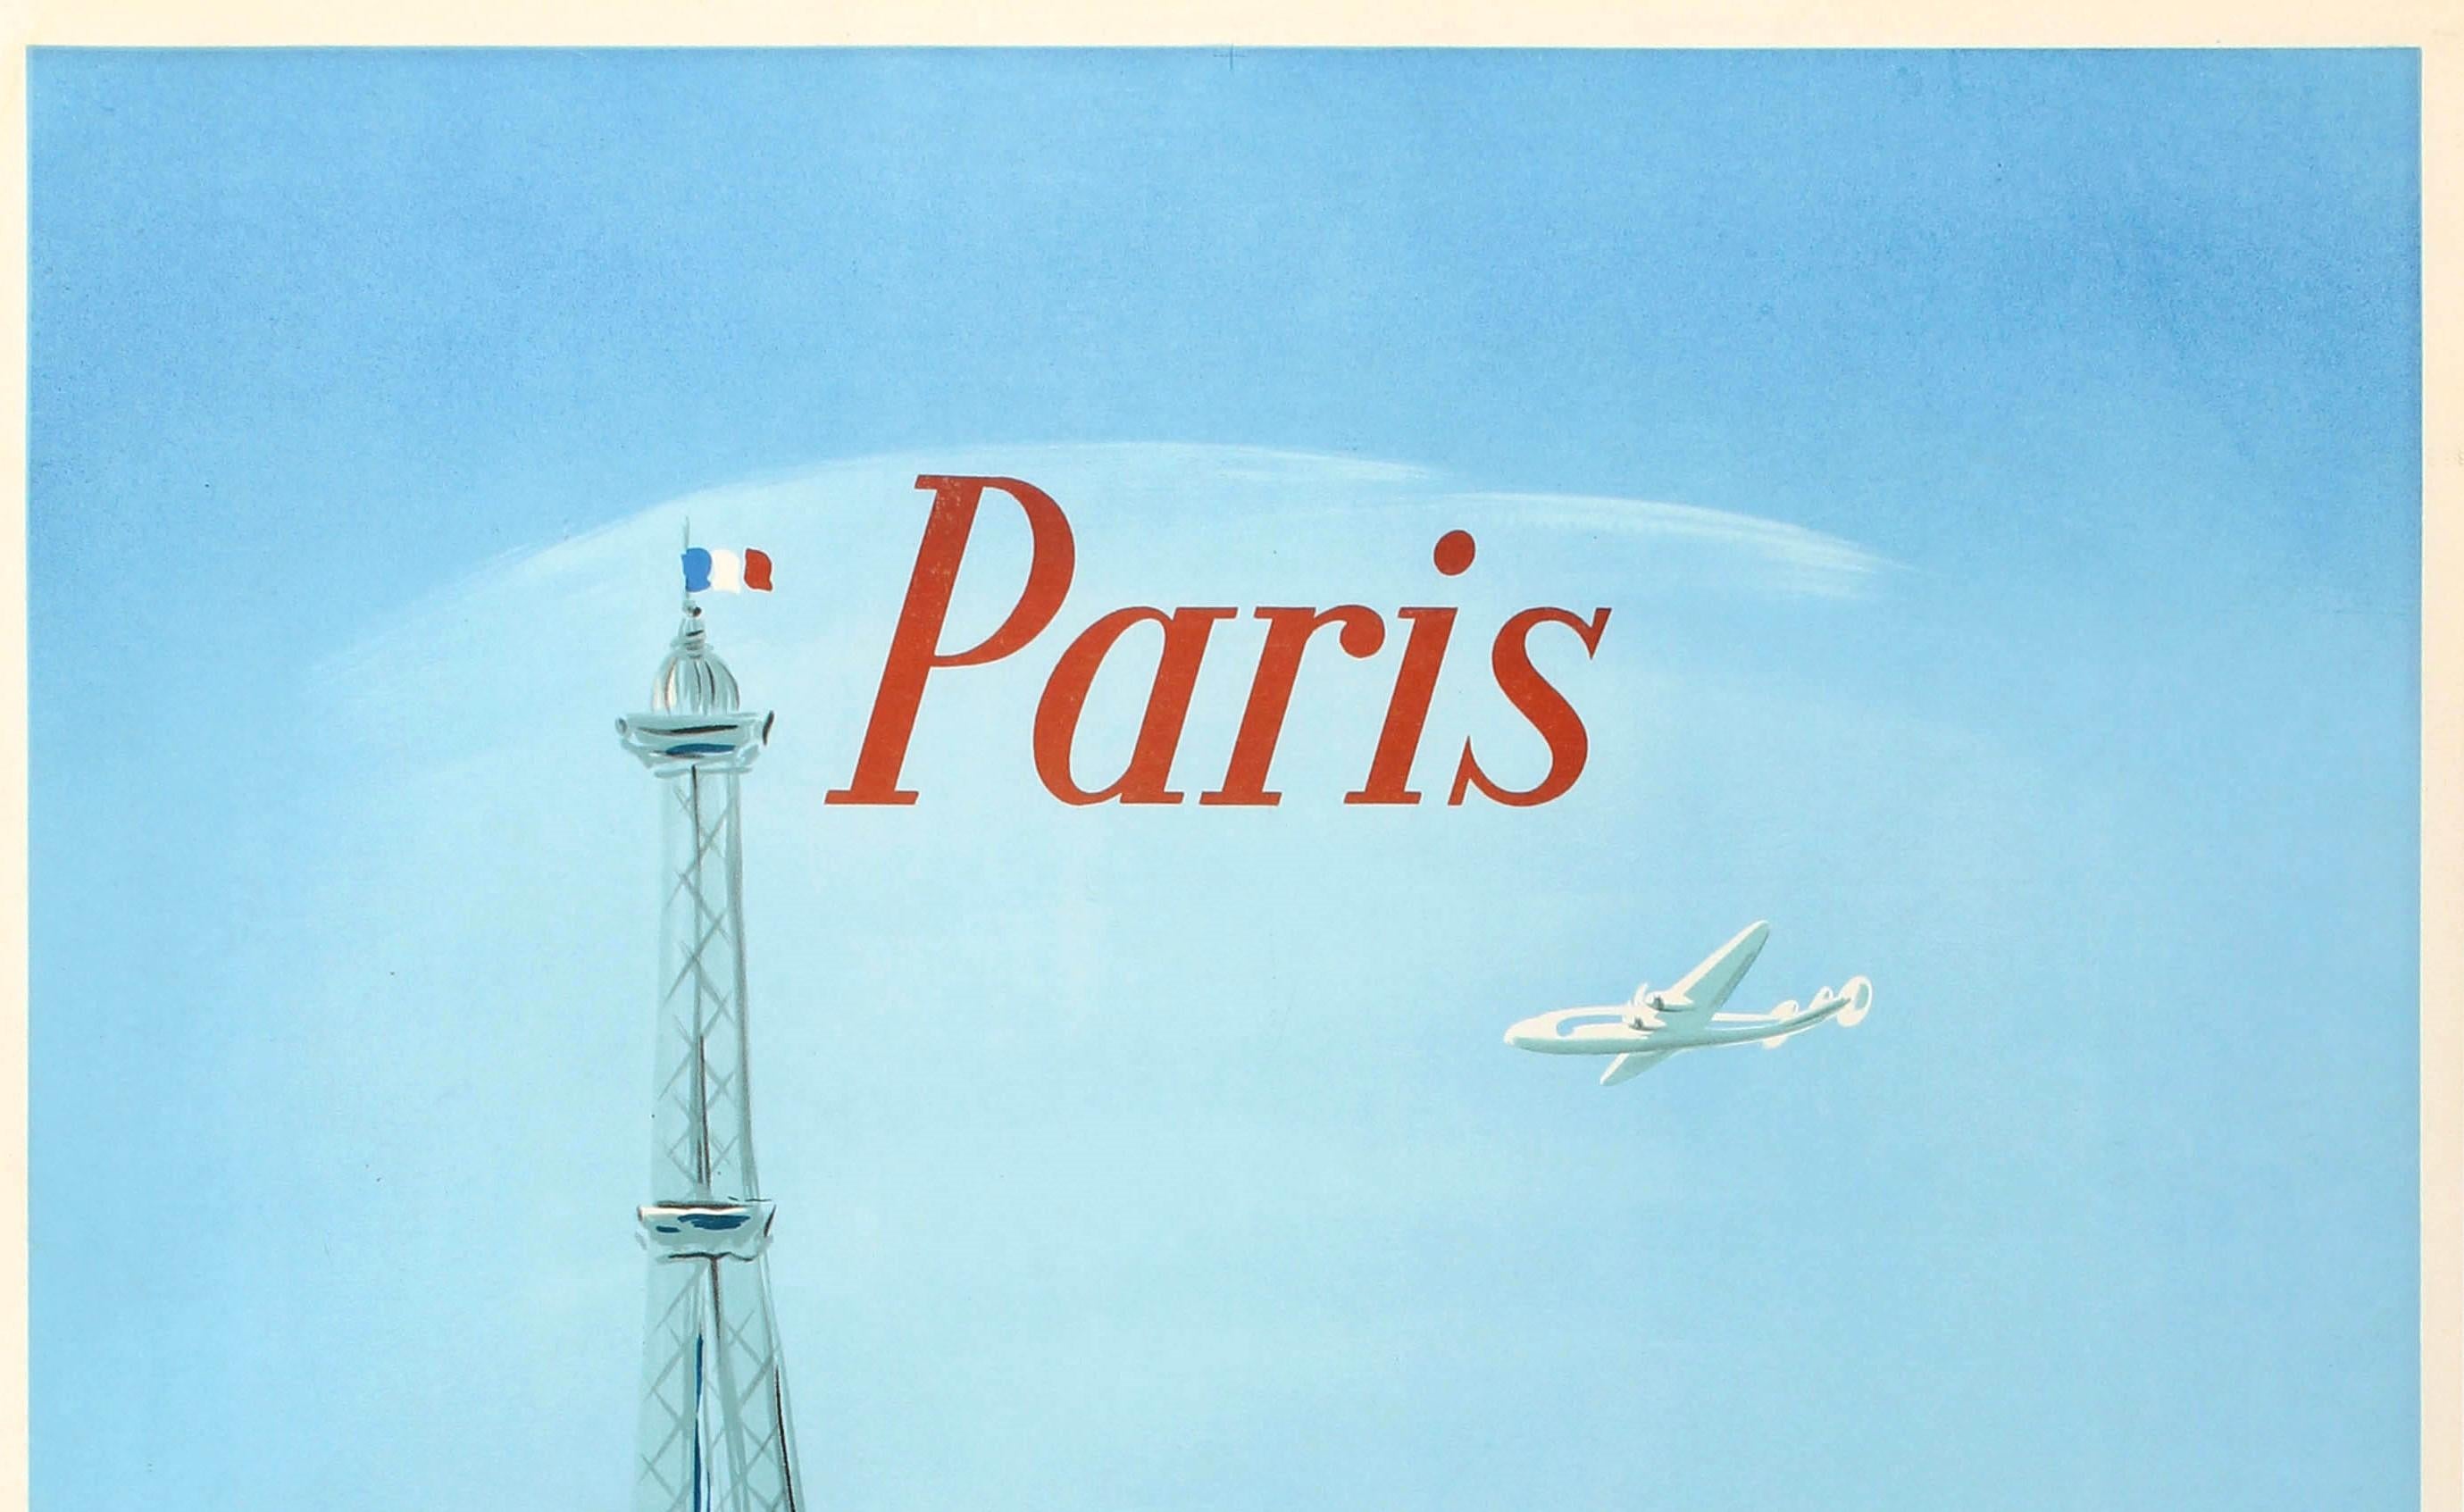 Original Vintage Air France Poster Paris Ft. Eiffel Tower Lockheed Constellation - Print by Regis Manset